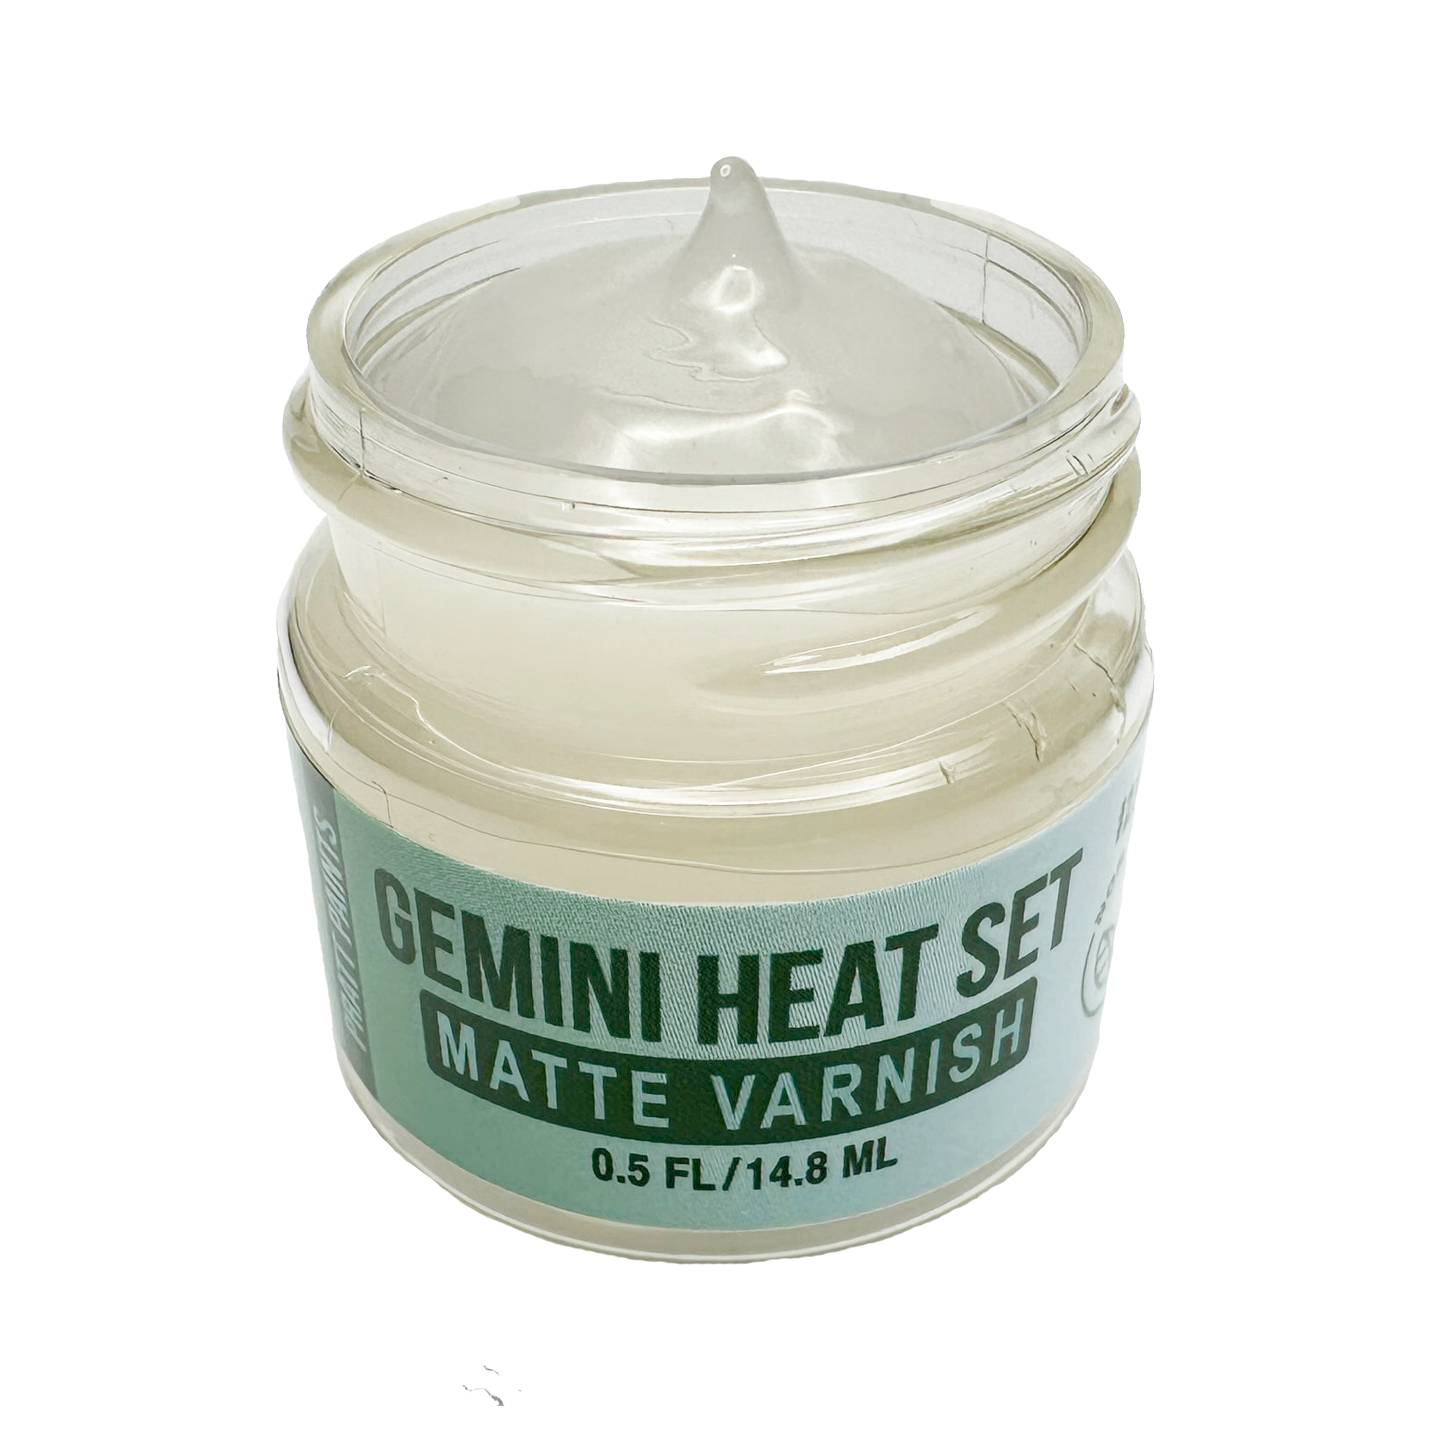 NEW! Matte Varnish - Gemini Heat Set Paint - 22 grams #2335